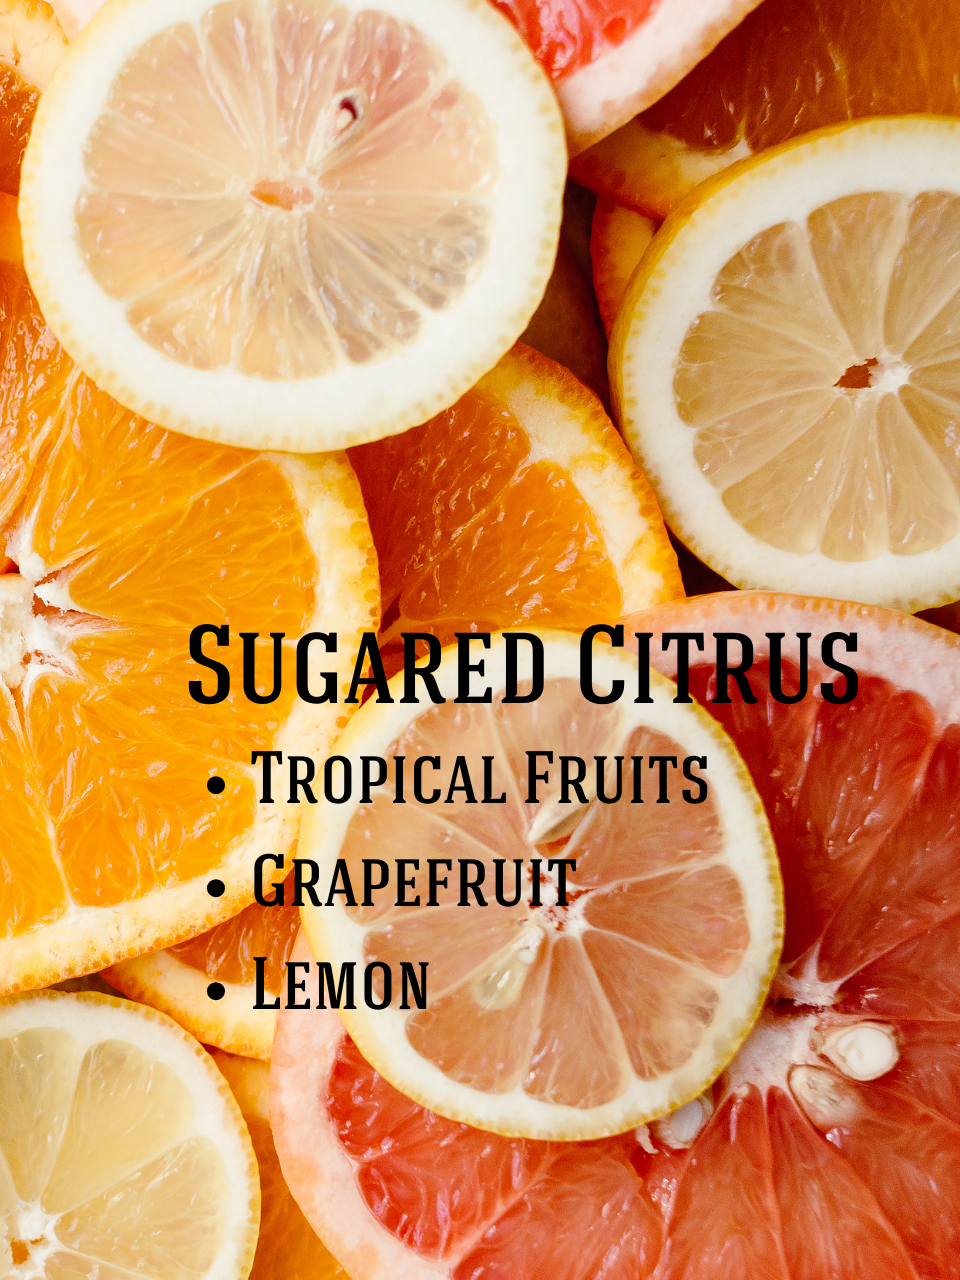 NEW! Sugared Citrus Soy Candle: Tropical Fruits, Grapefruit, Lemon